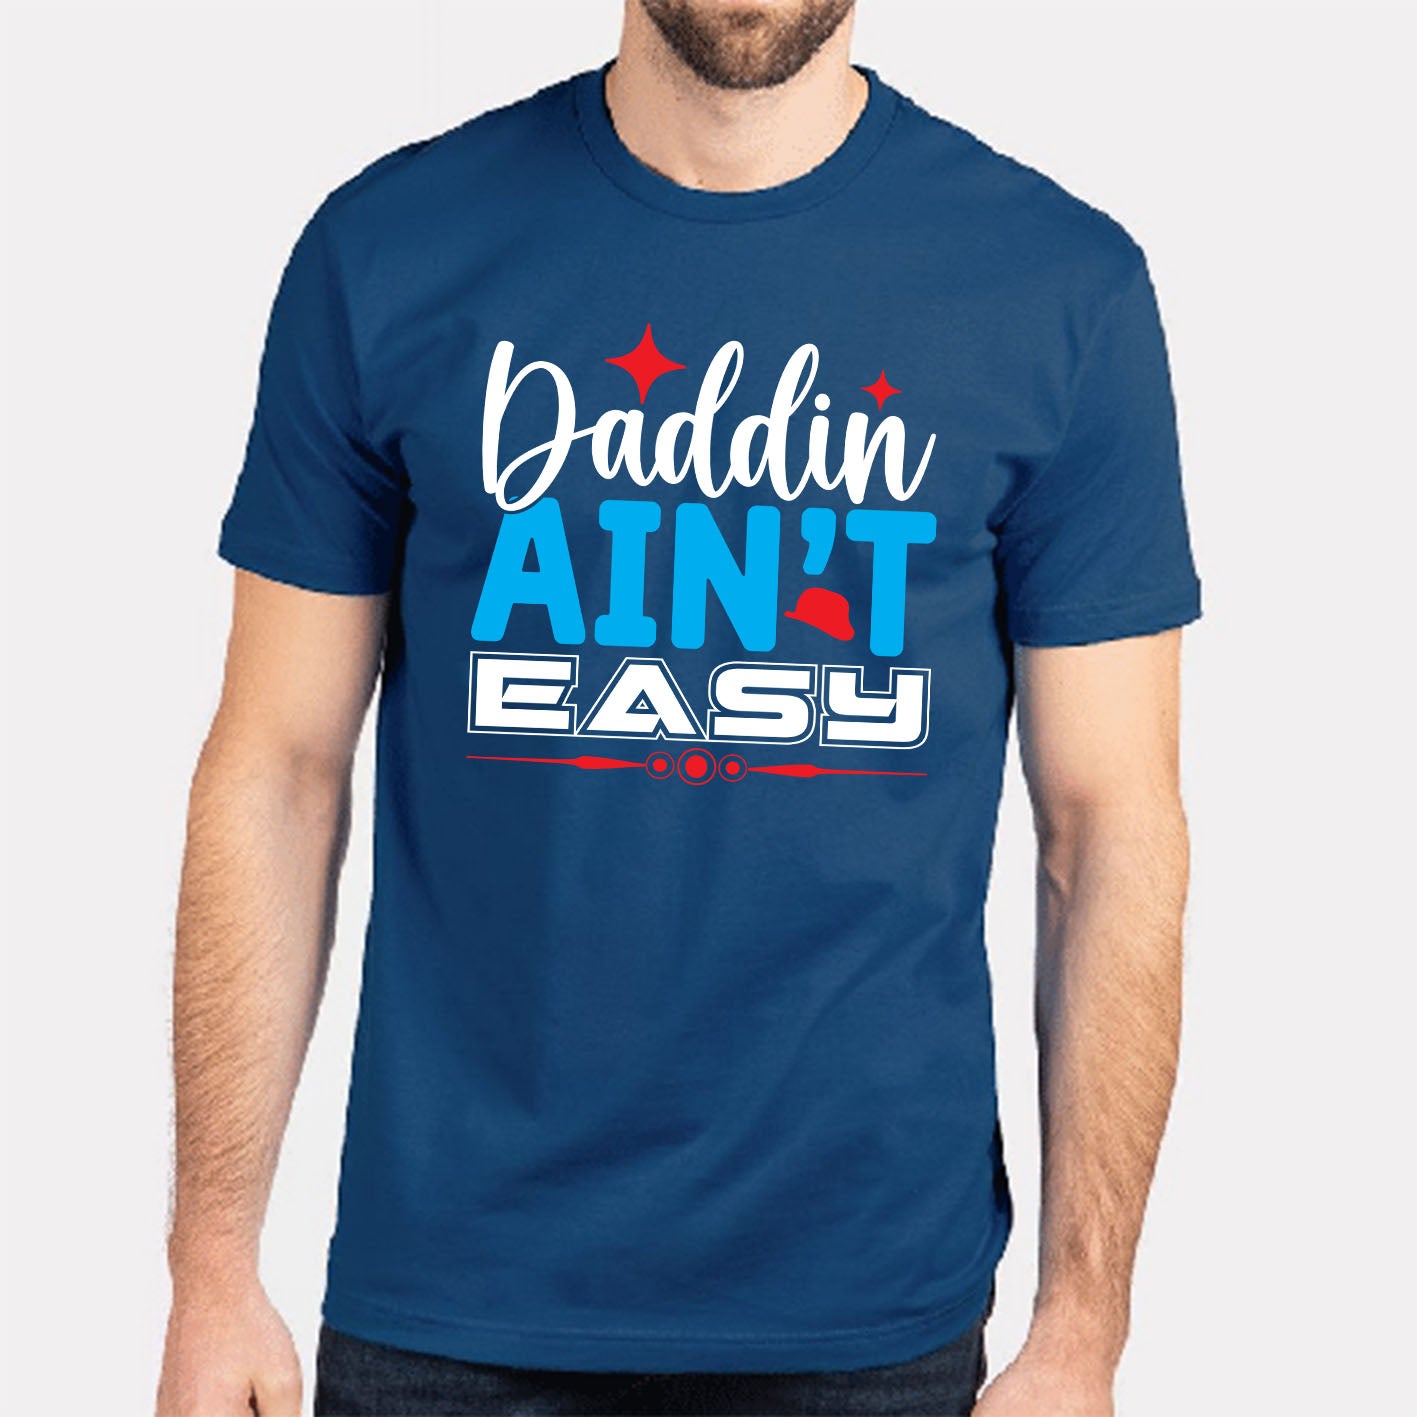 Best Daddin Ain't Easy Fathers Day Custom Short Sleeve Tshirts Gift